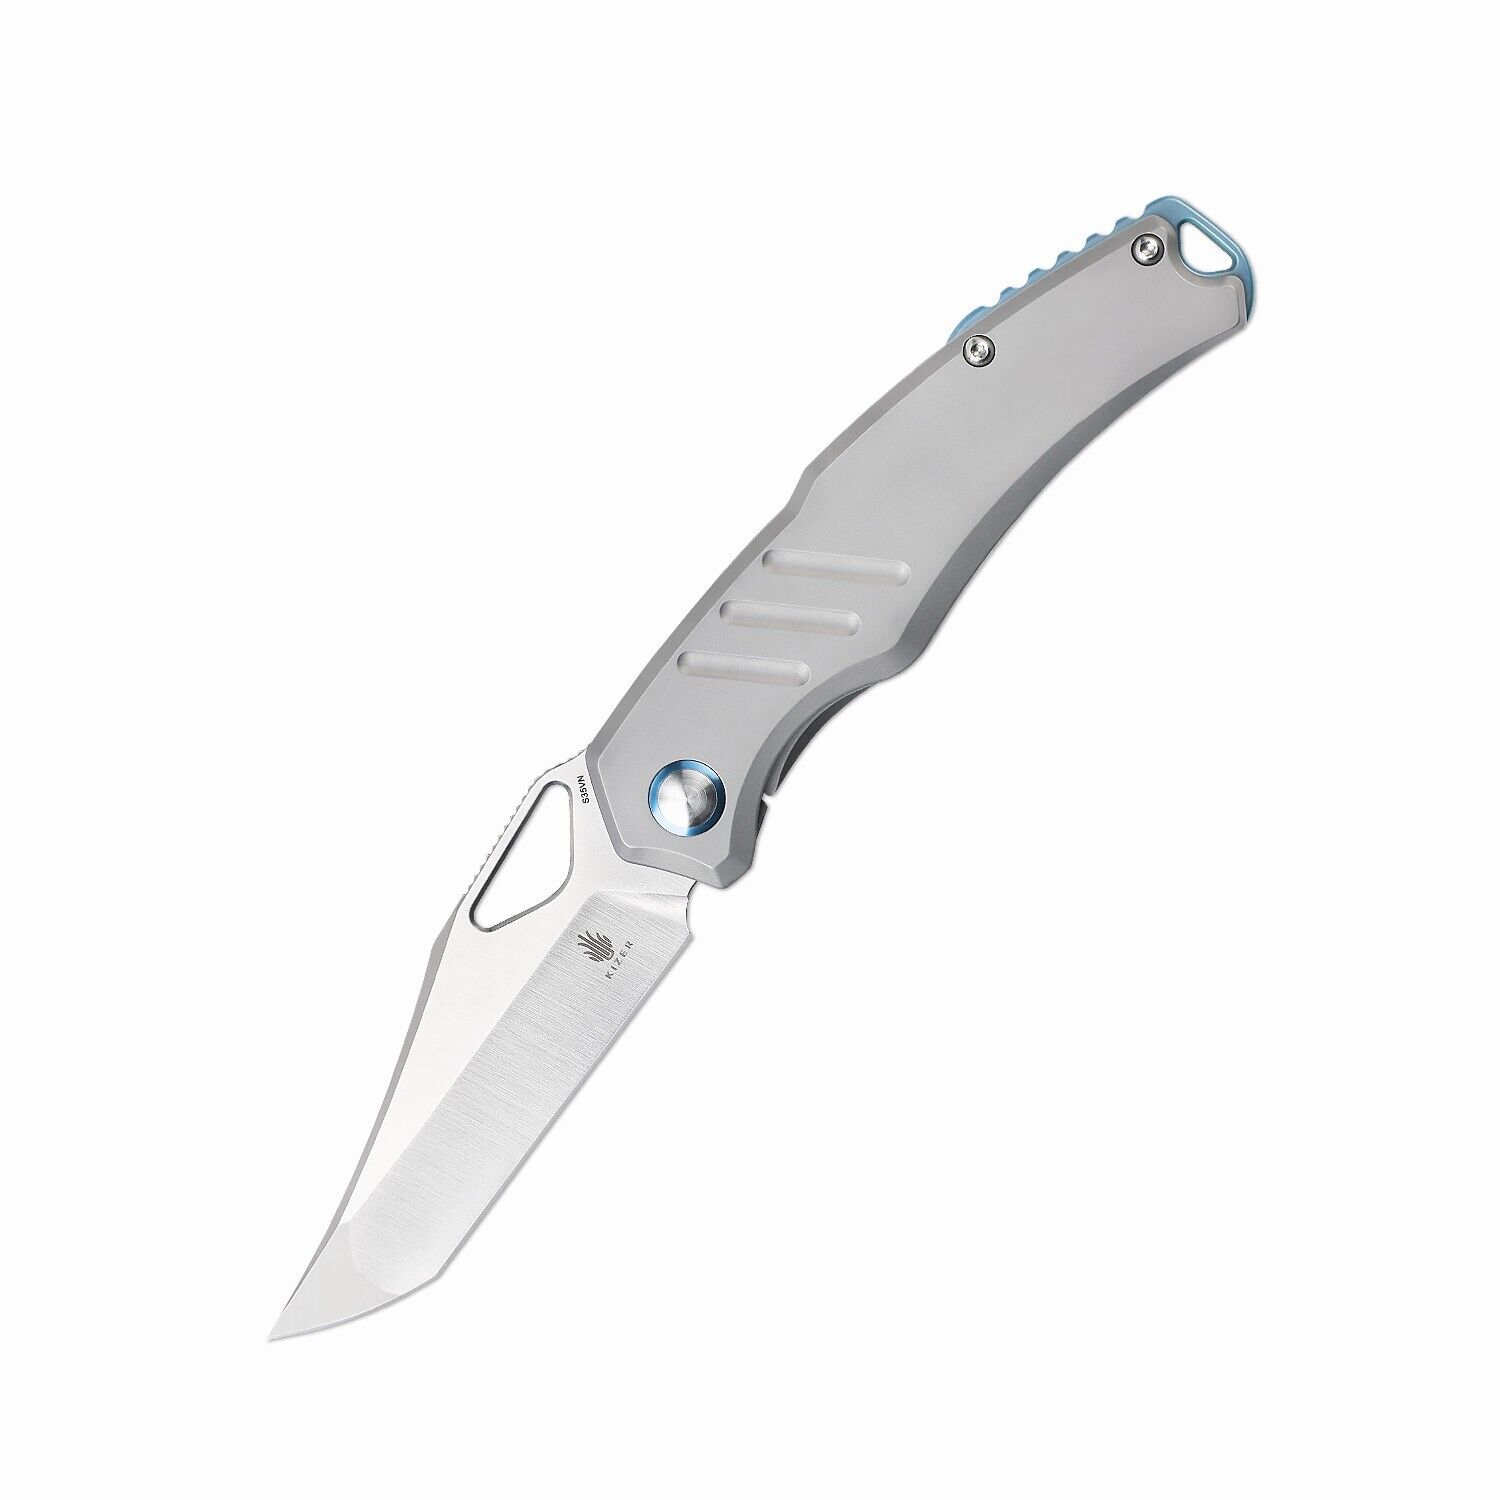 Kizer Torngat Folding EDC Knife S35VN Steel Titanium Handle Ki3625A1